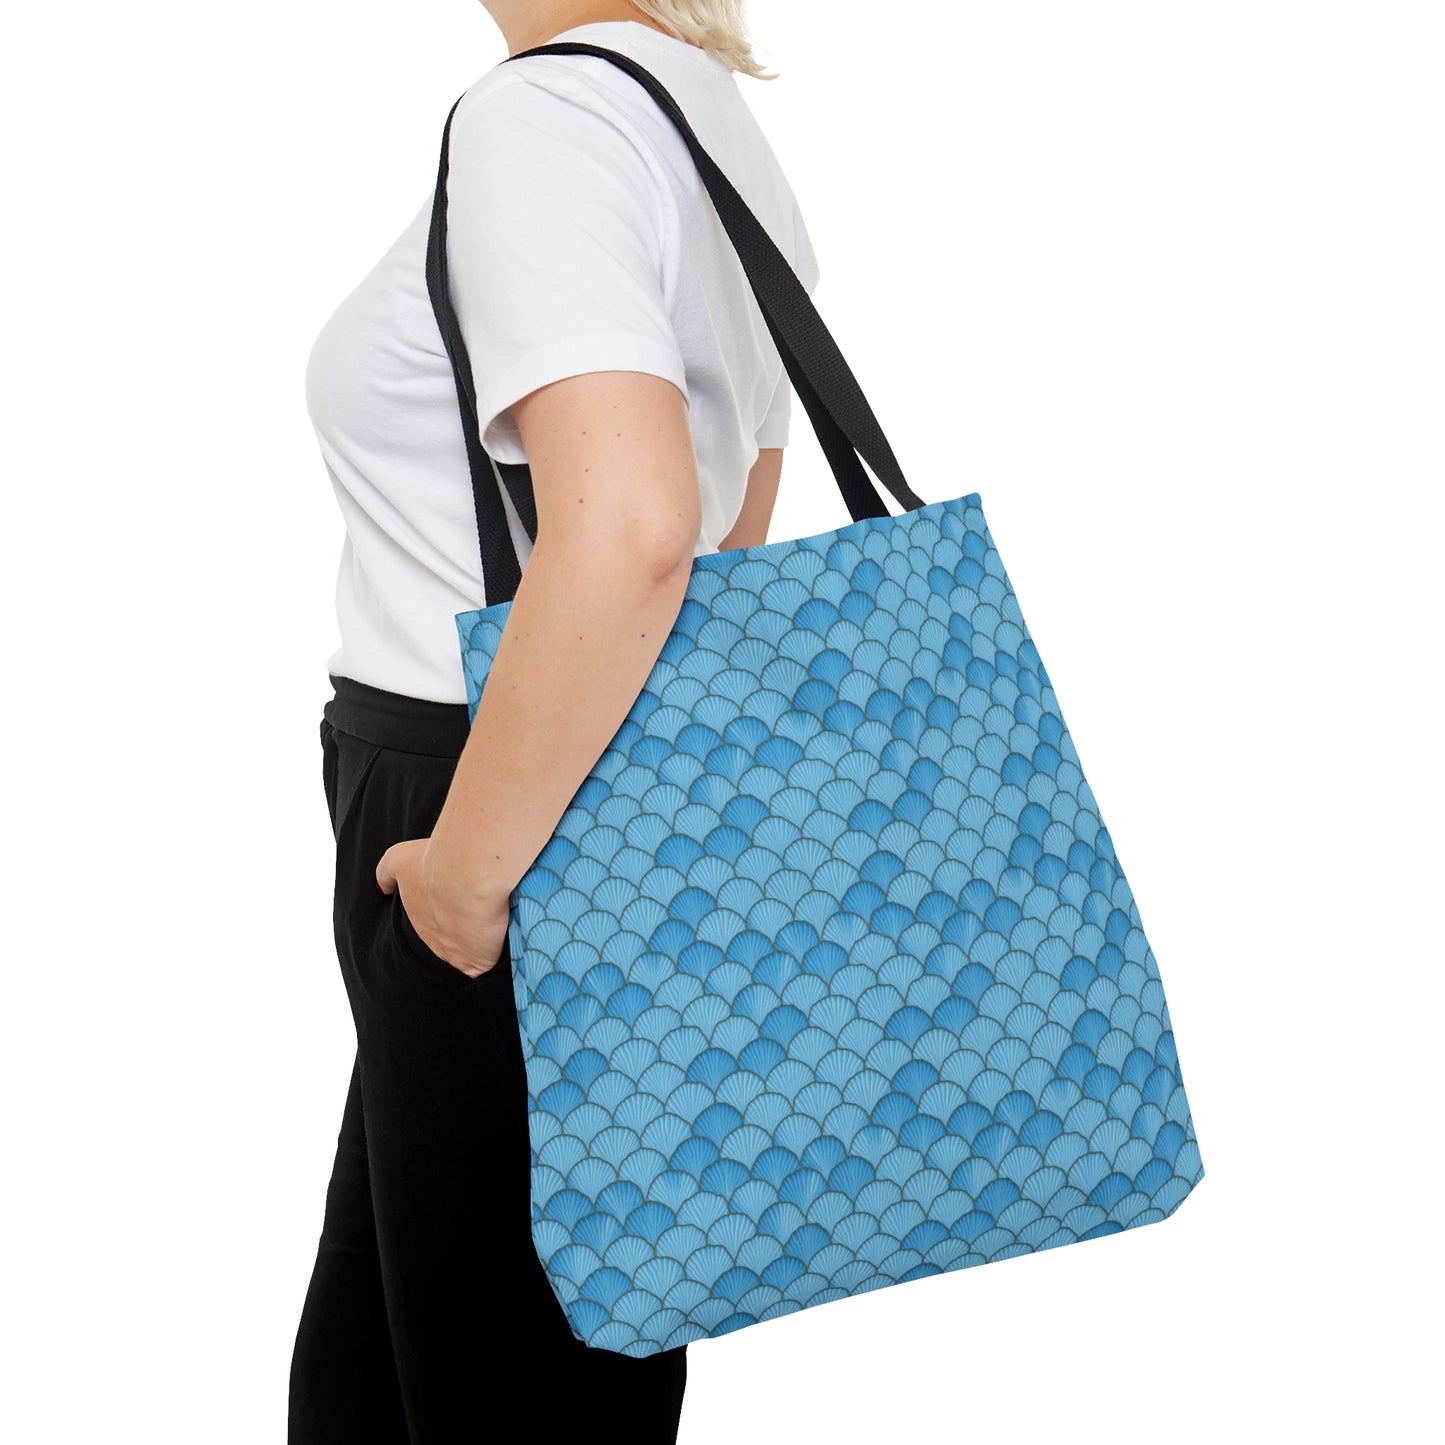 Blue Mermaid Seashell Tote Bag - Enchanting and Beach-Ready Accessory Tote Bag